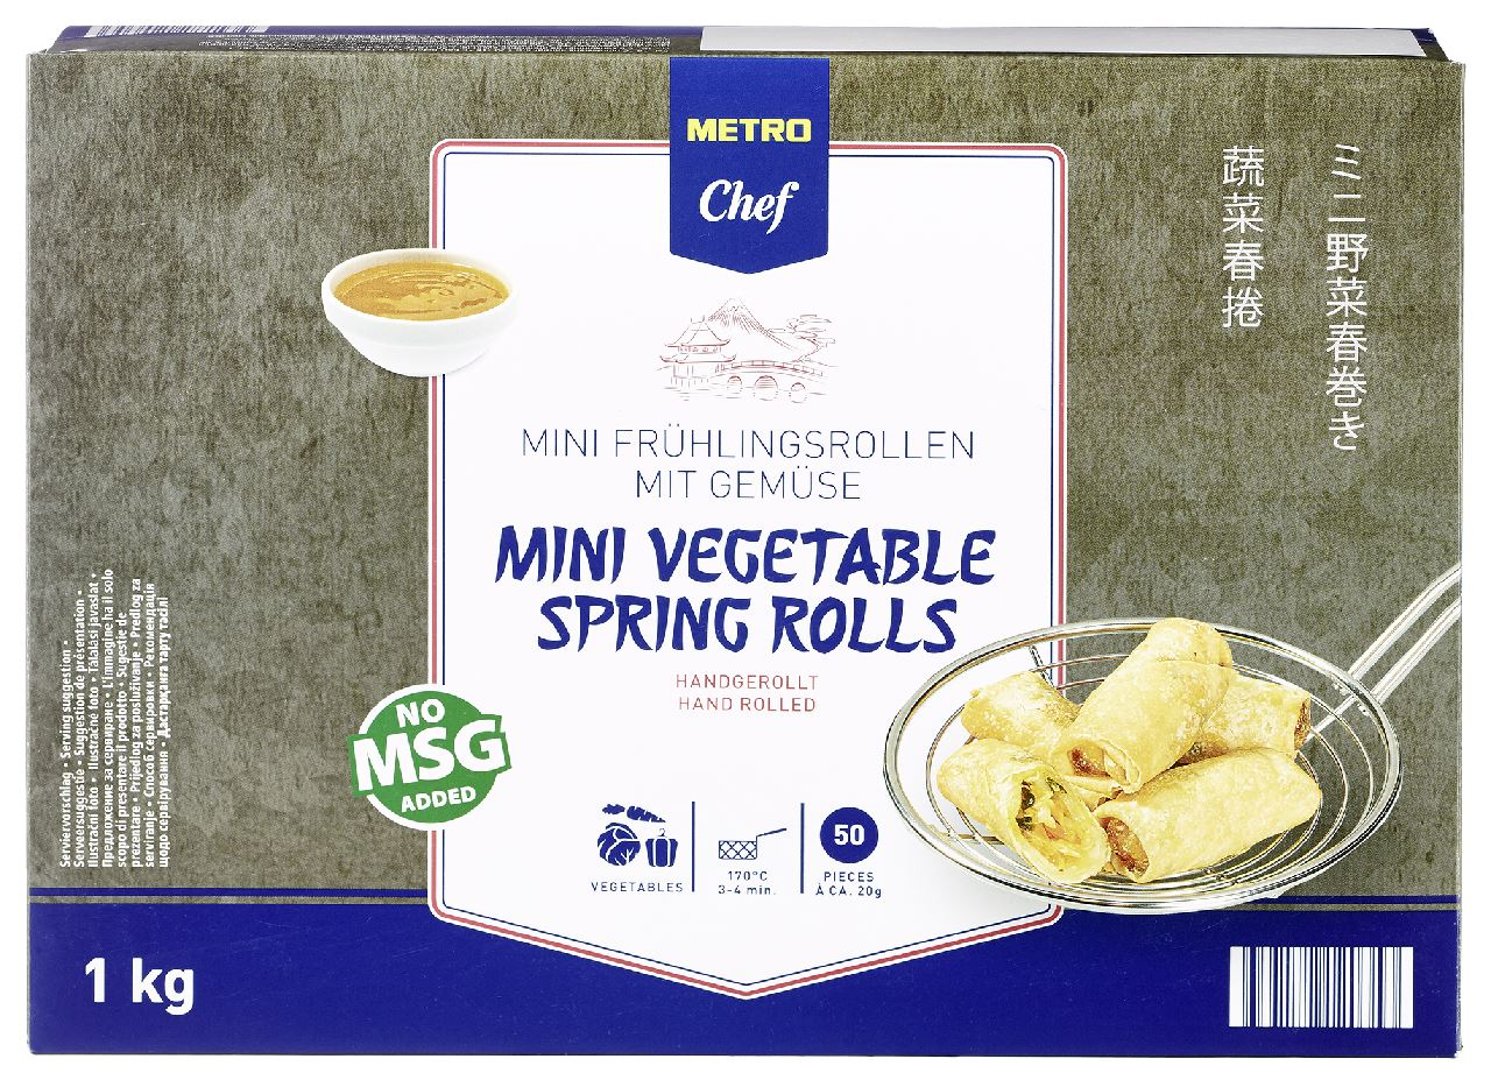 METRO Chef - Mini Vegetable Spring Rolls tiefgefroren - 1 kg Packung